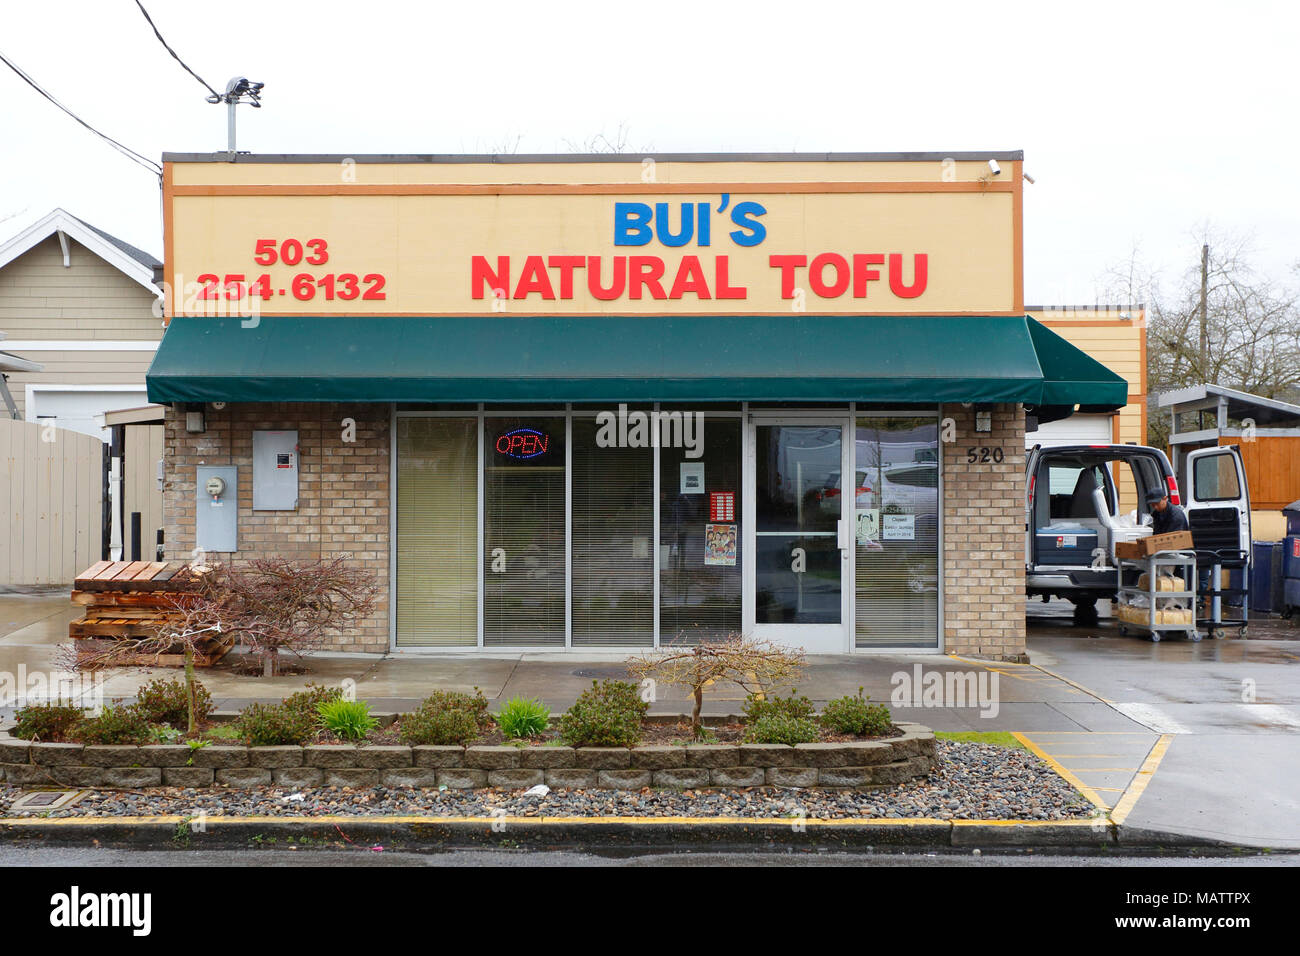 Bui's Natural Tofu, 520 NE 76th Ave, Portland, Oregon. exterior storefront of a tofu shop in the Montavilla neighborhood. Stock Photo